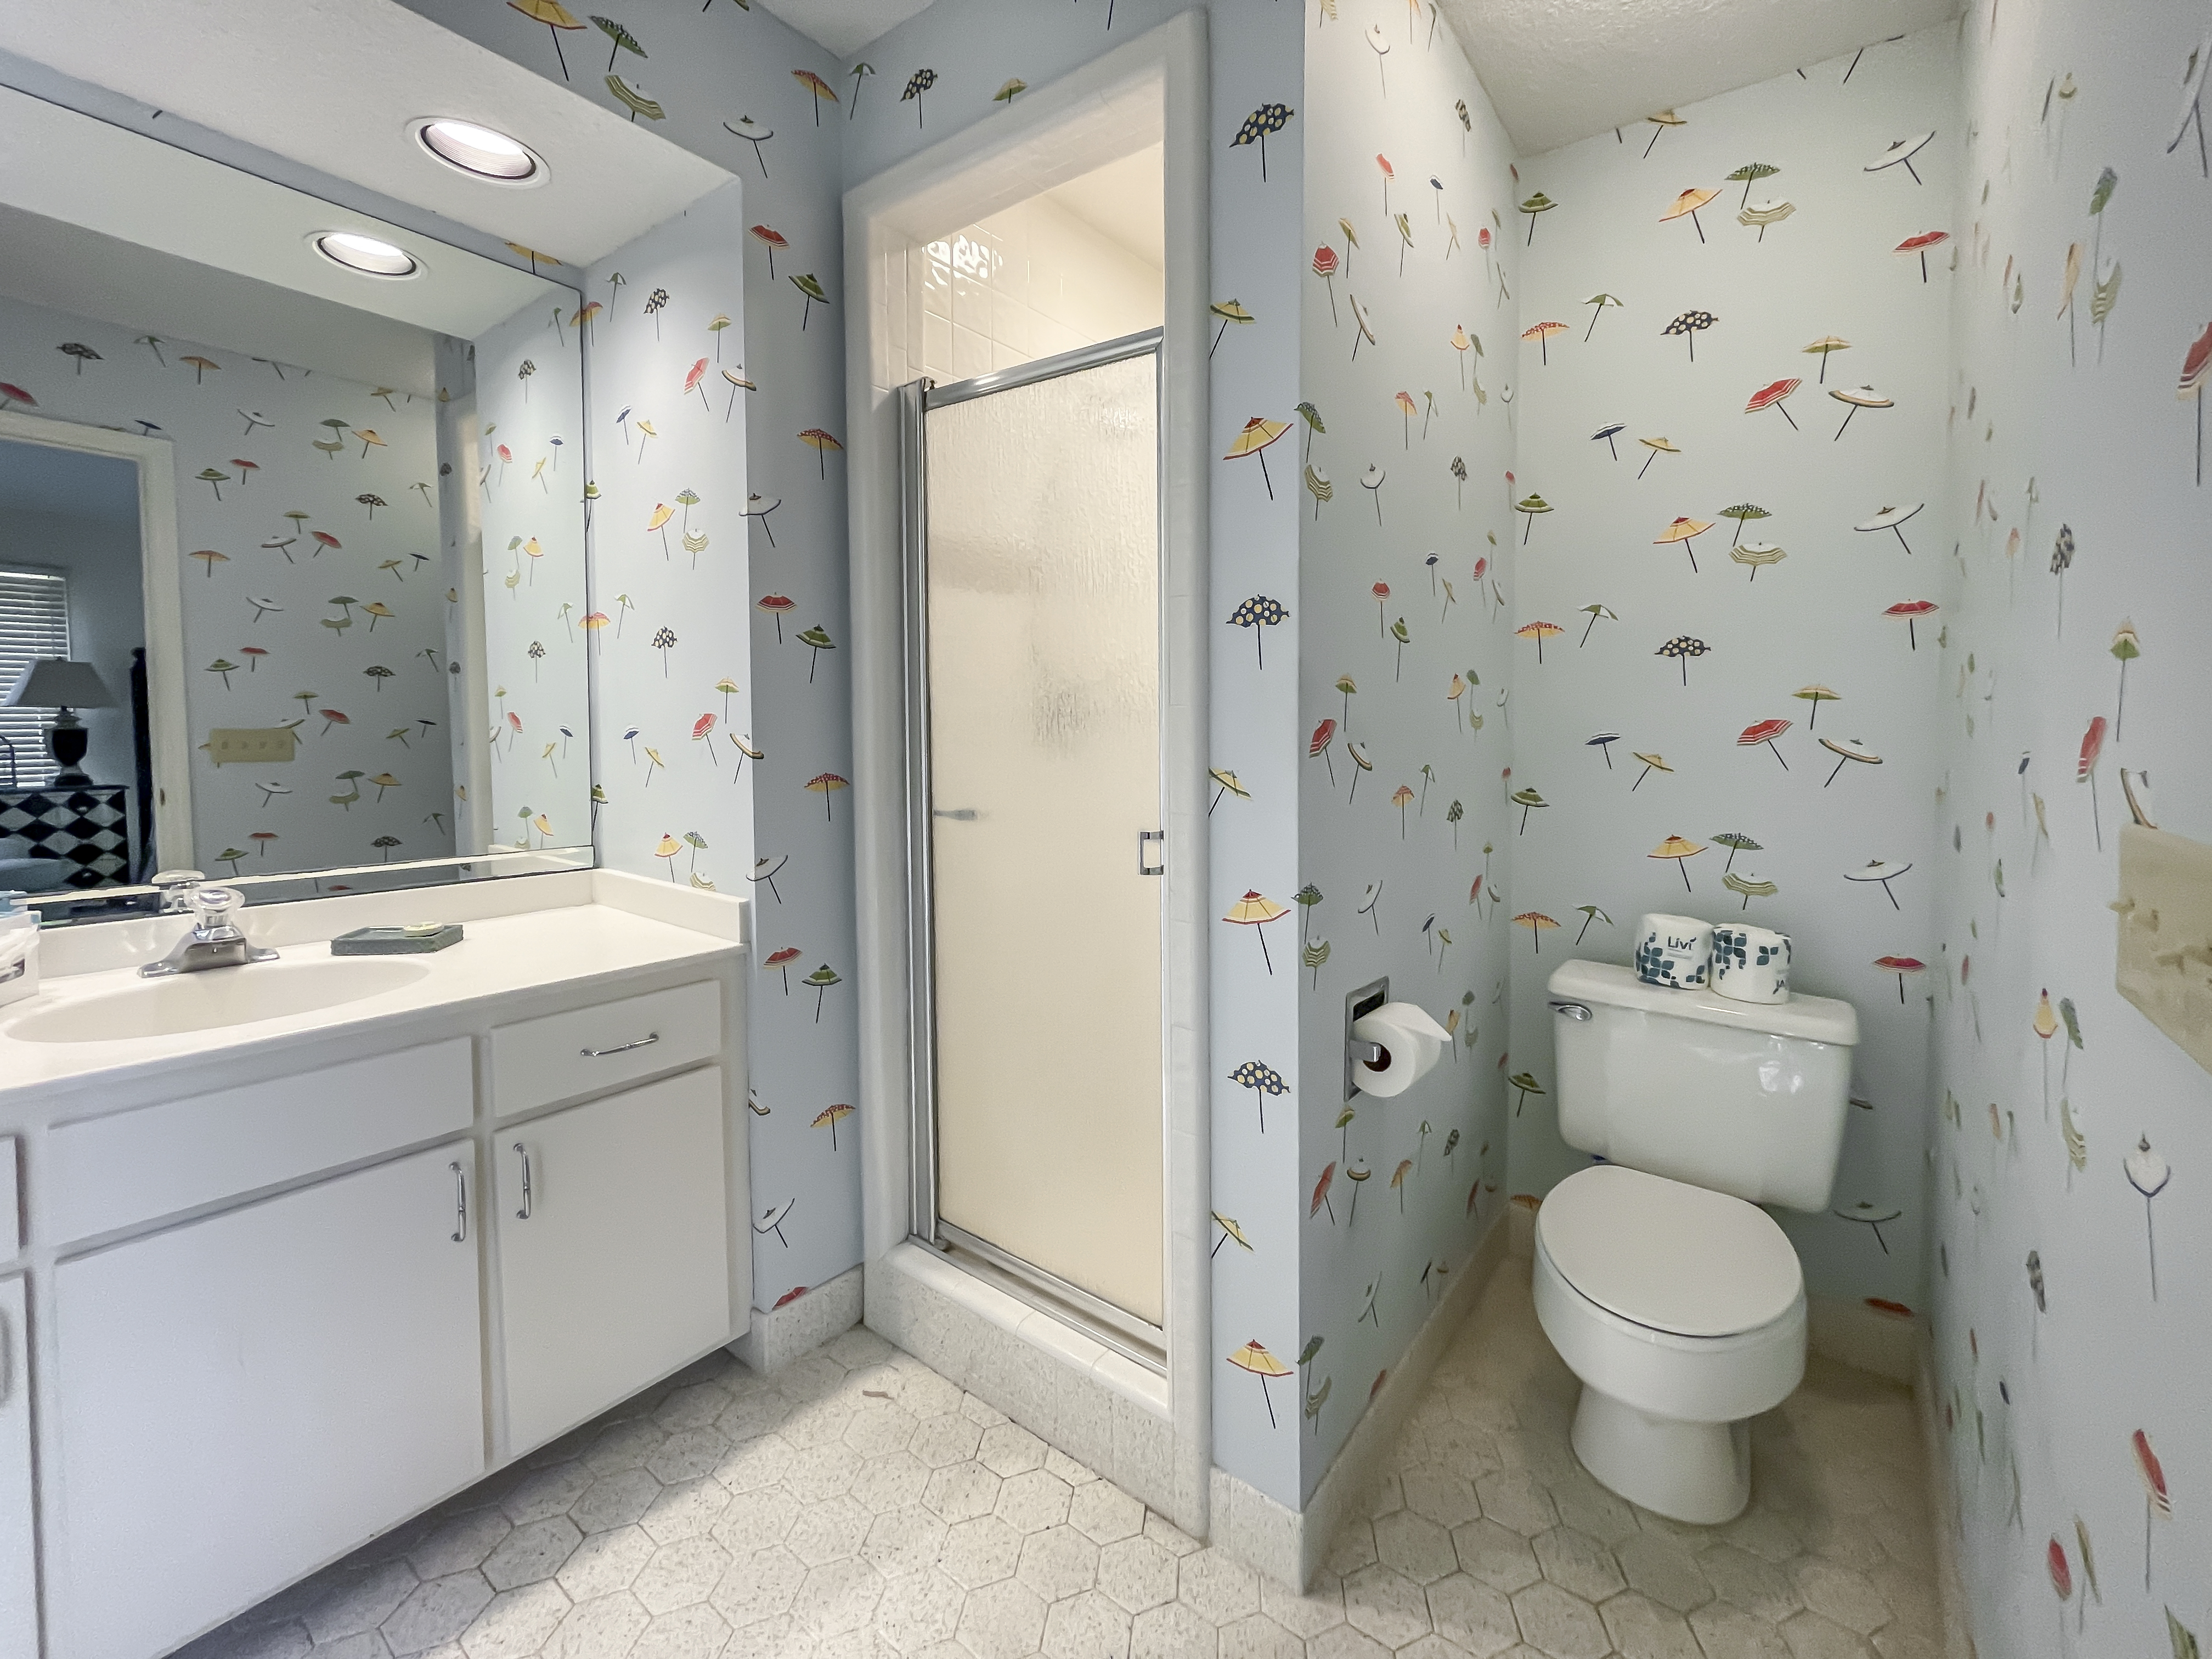 3-Spotted-SandpiperKing-Bathroom-8956-big.jpeg